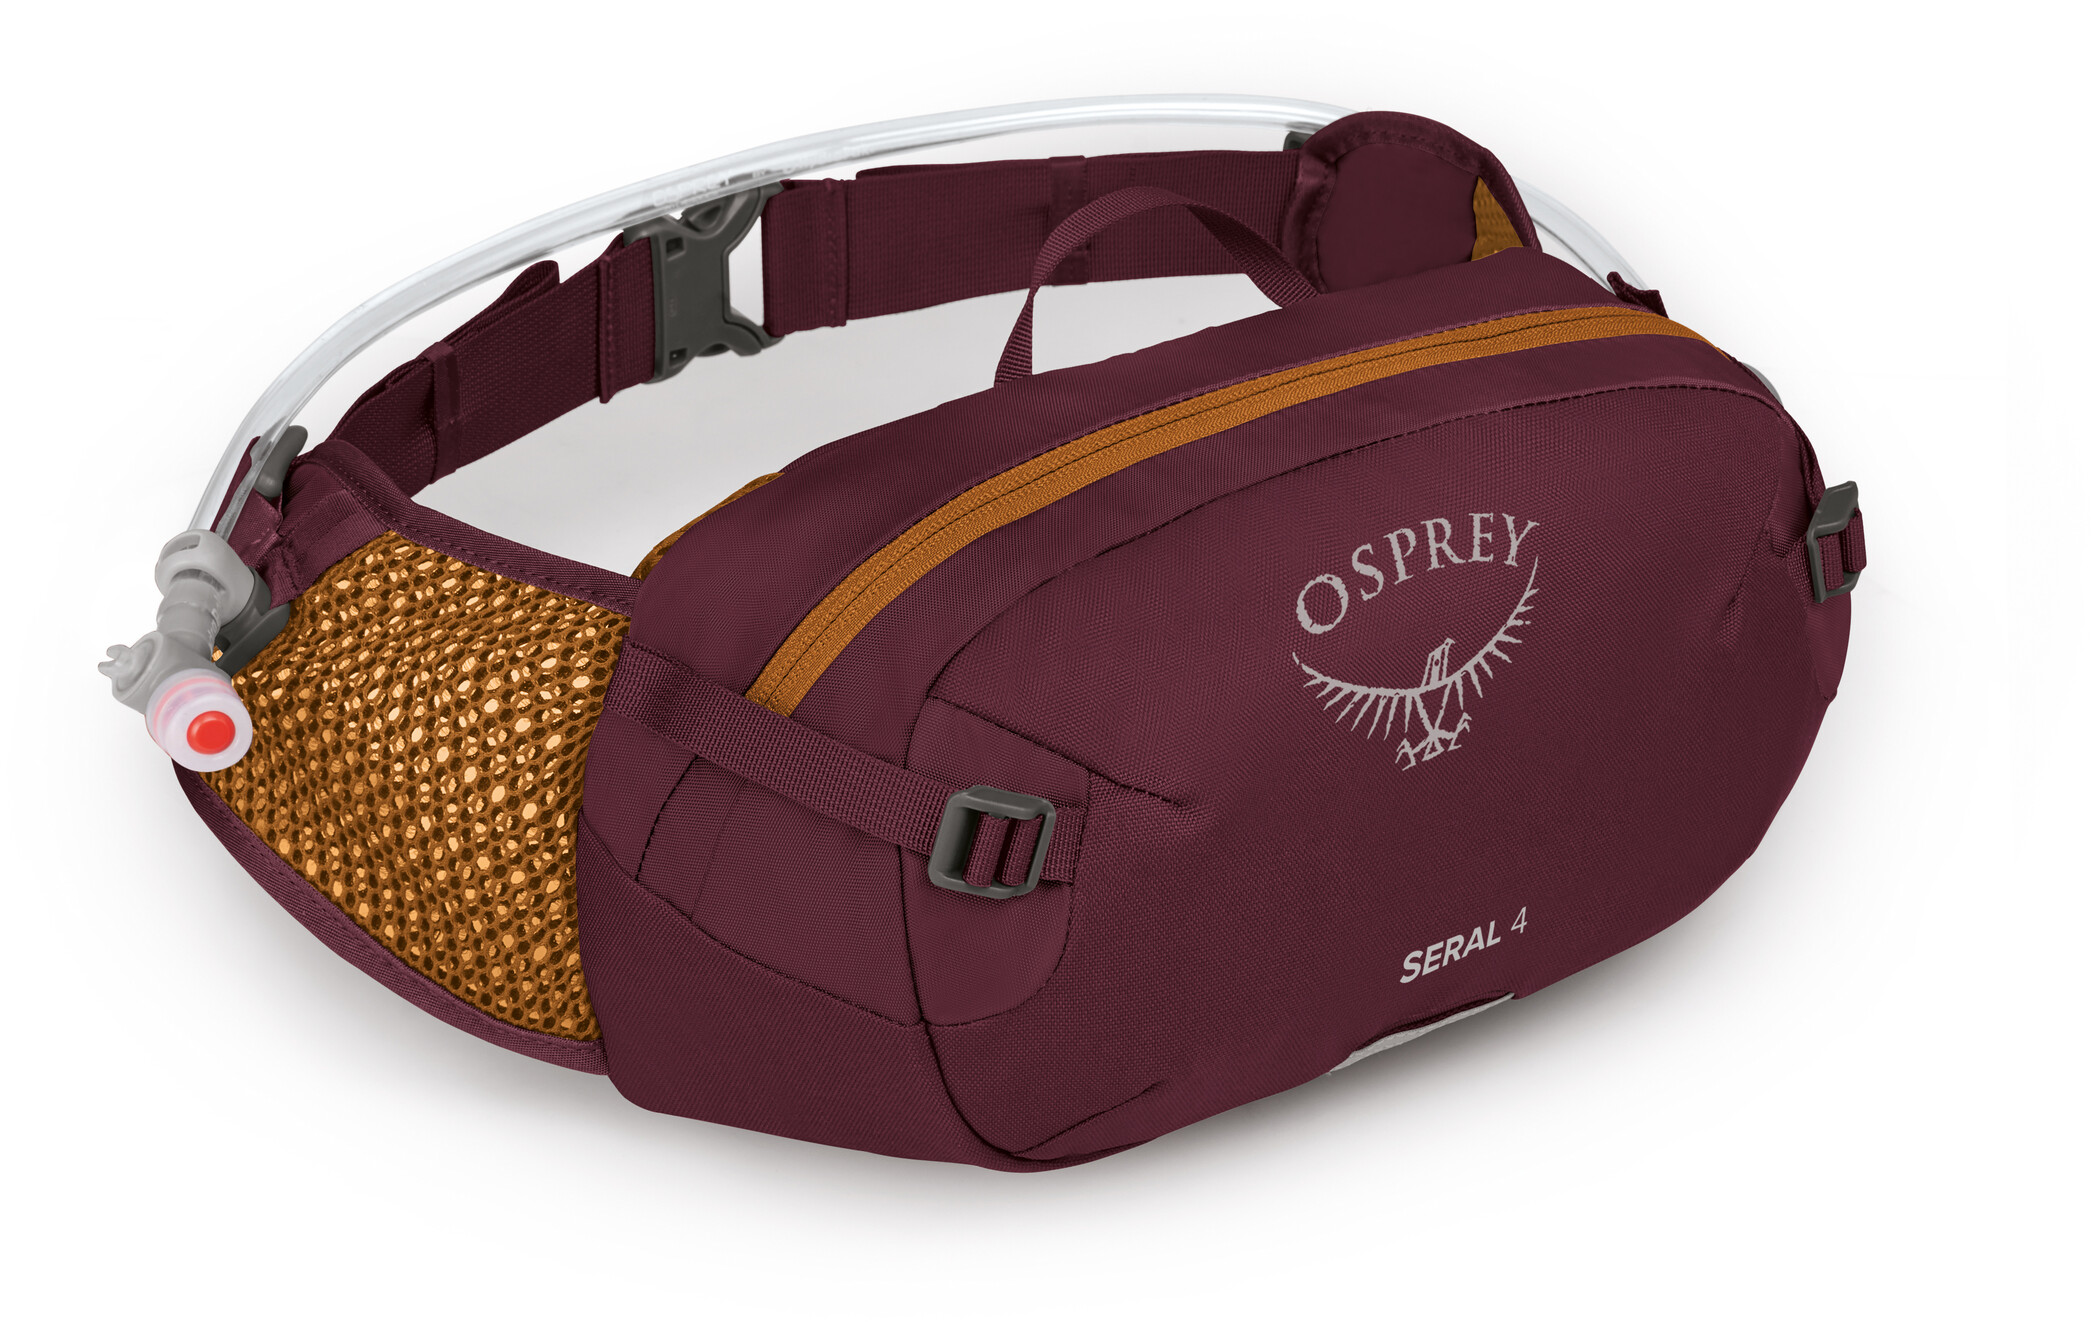 Osprey Seral 4 Hydration Waist Pack, violet | waist bag